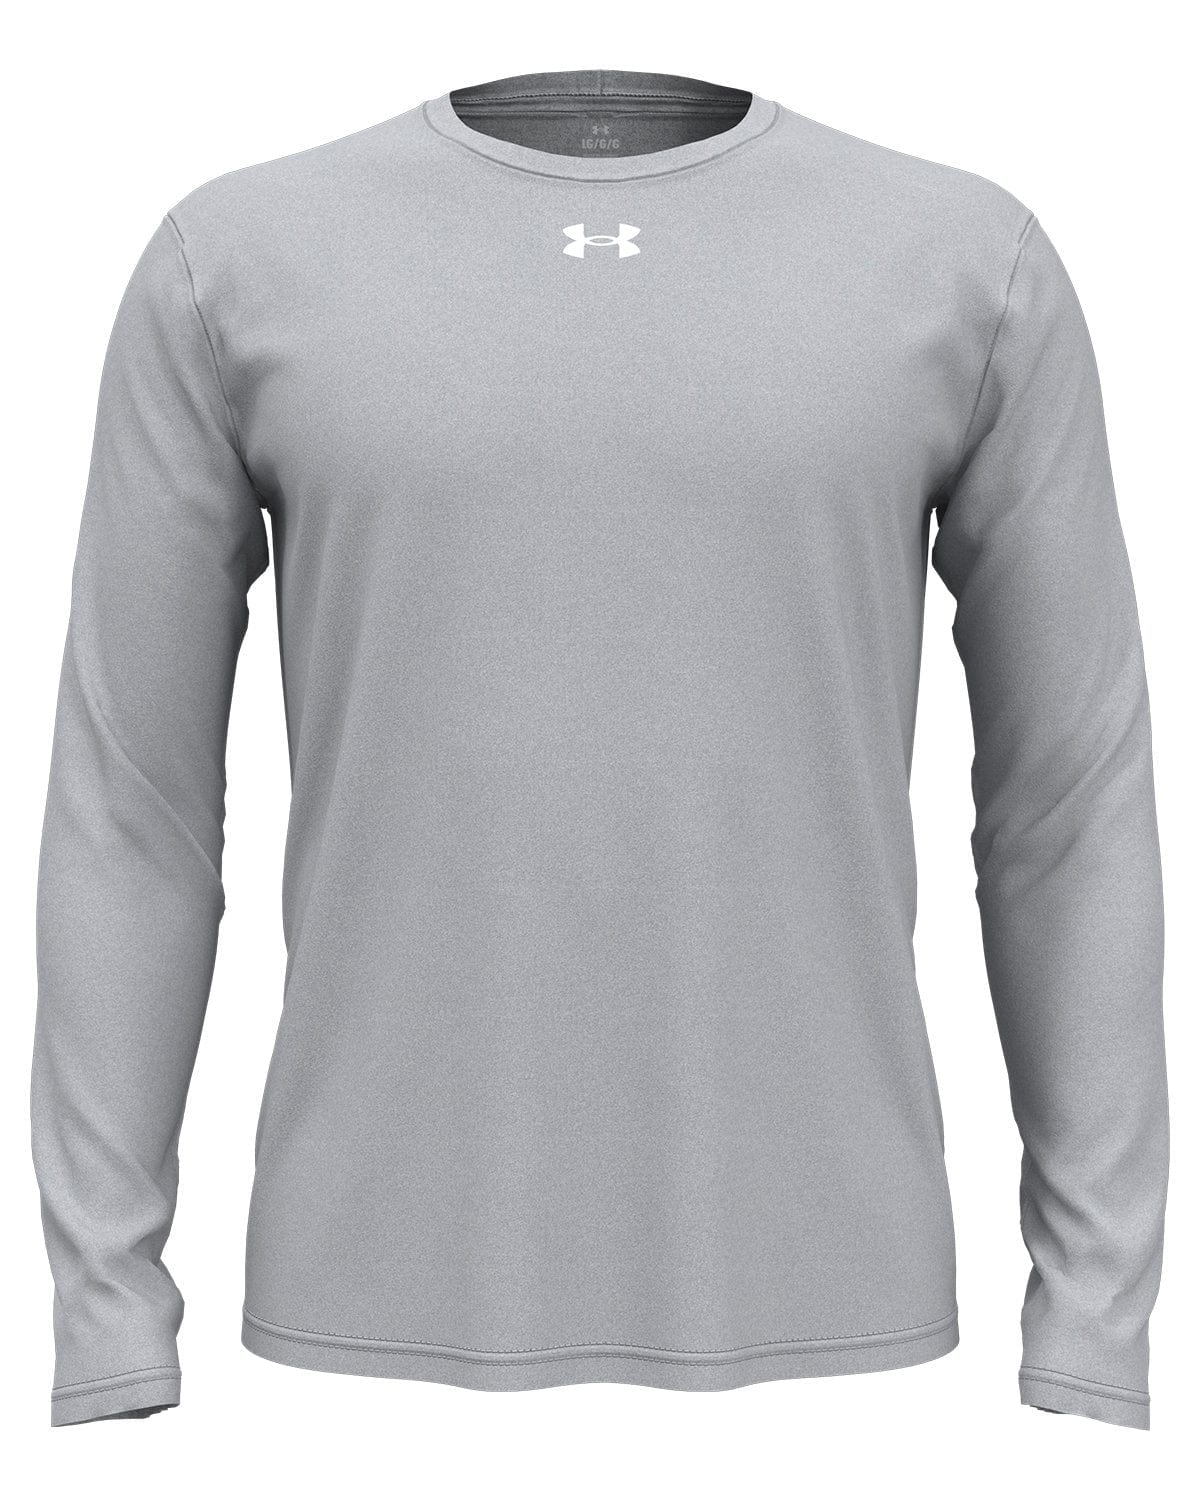 Under Armour T-shirts S / Mod Grey/White Under Armour - Men's Team Tech Long-Sleeve T-Shirt